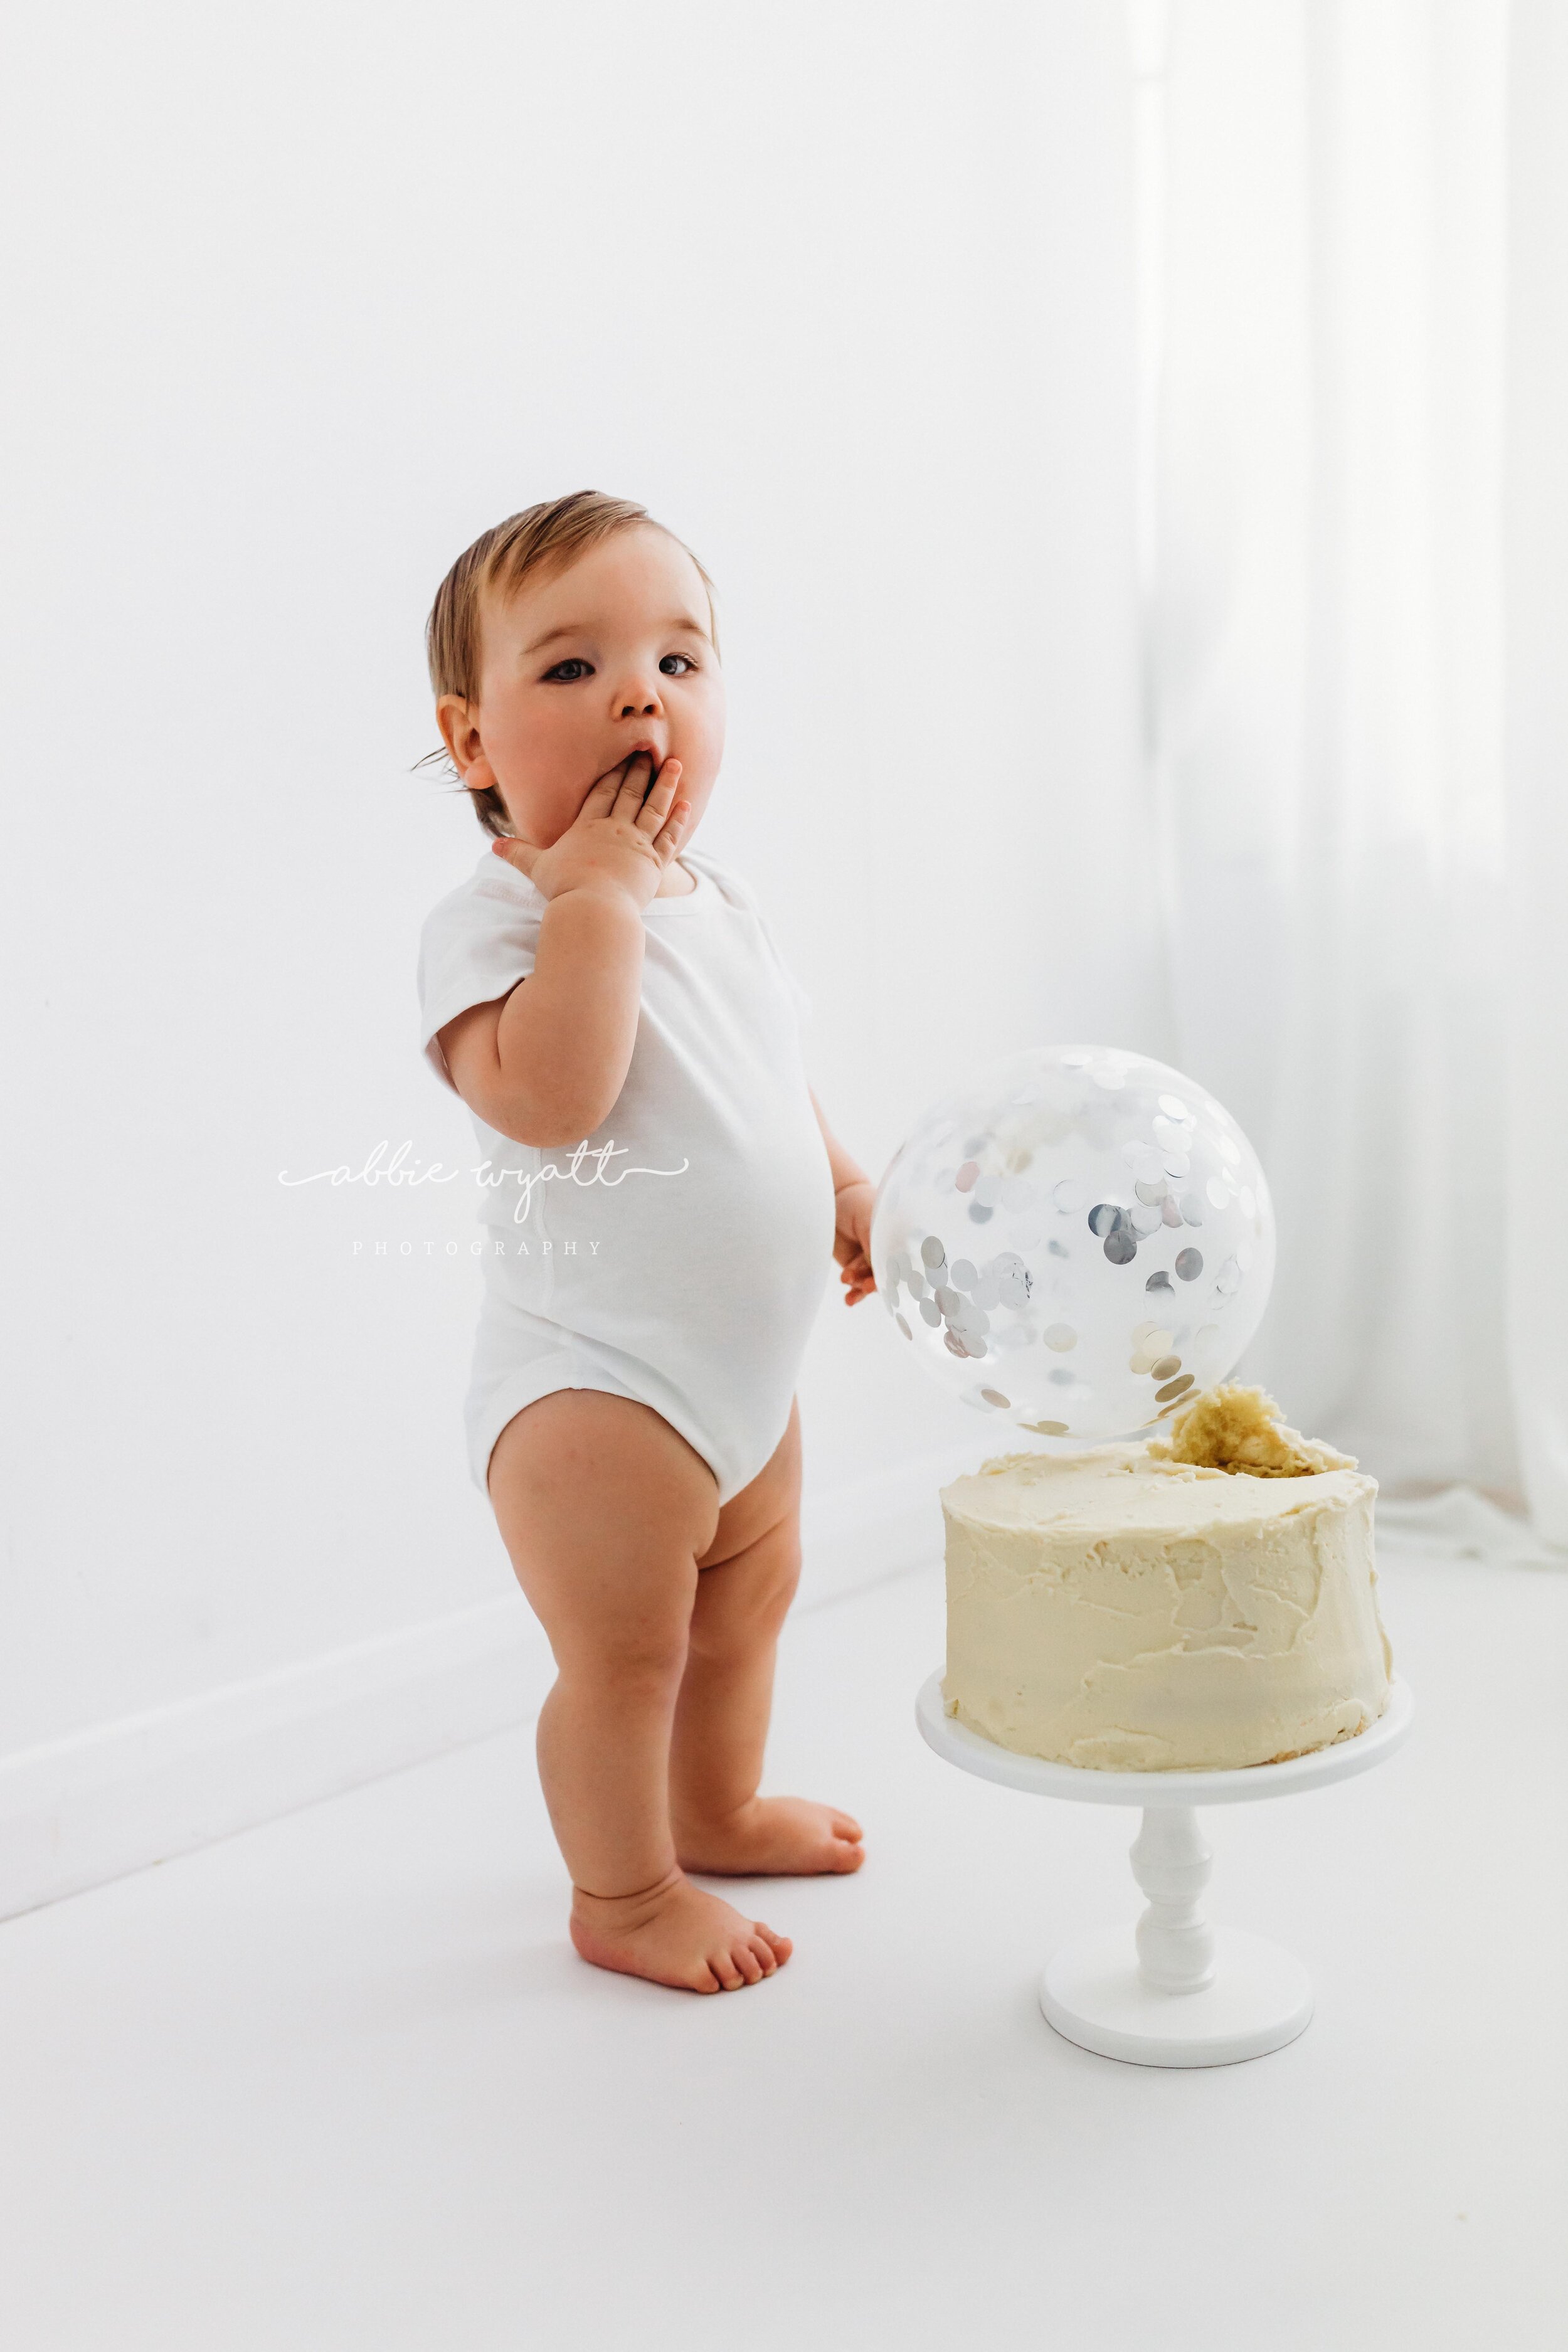 Abbie Wyatt Photography - Newborn, Baby & Cake Smash Photographer - Hemel Hempstead 4.jpg